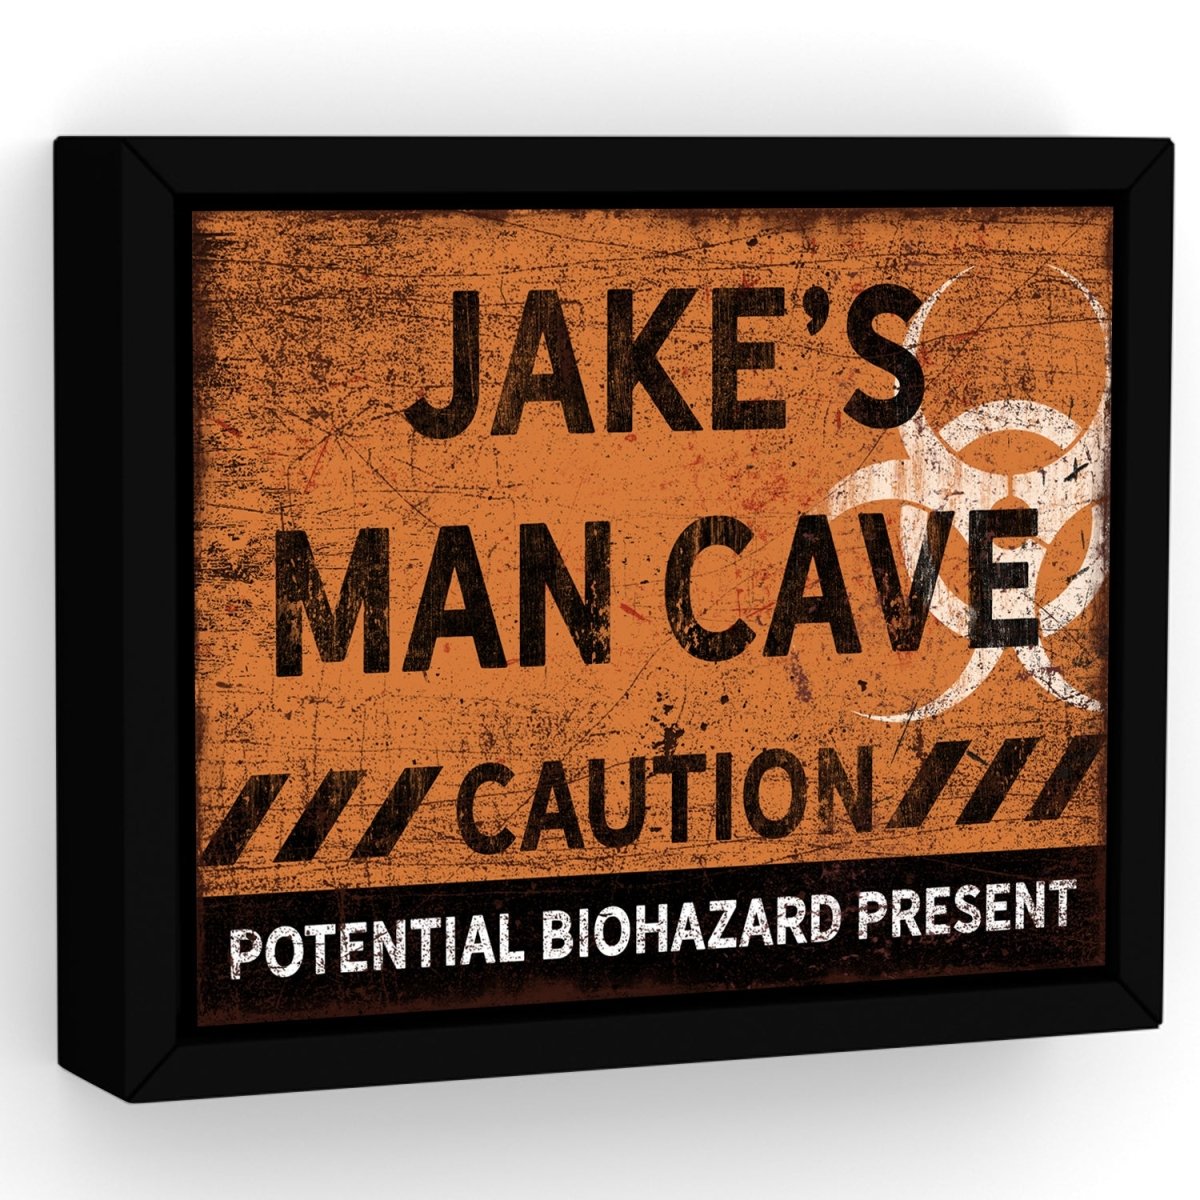 Personalized Man Cave Caution Sign - Pretty Perfect Studio